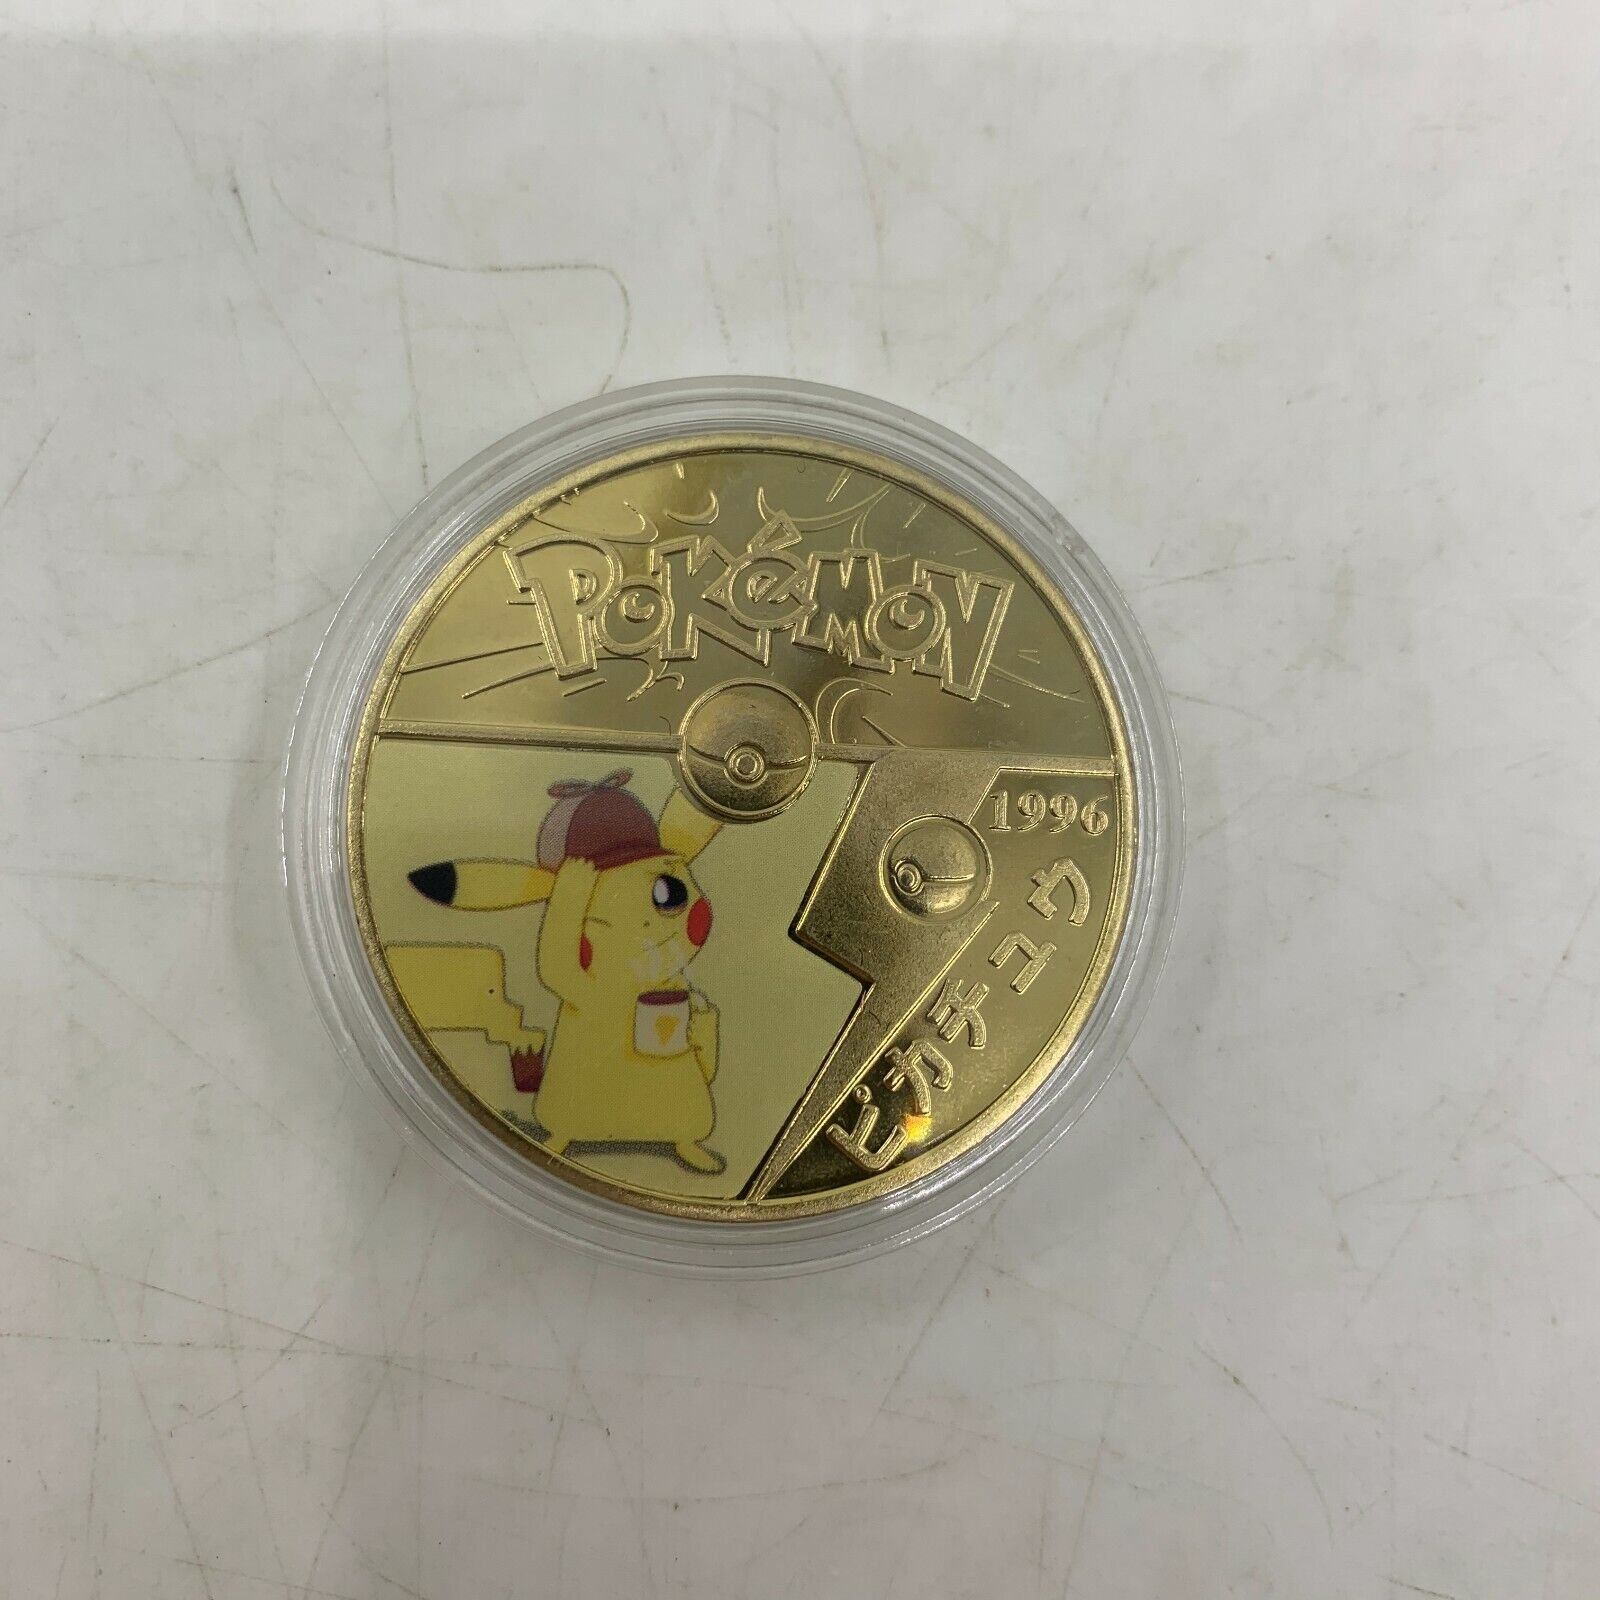 10pcs Pokemon Pikachu Coin Japan Anime Gold Commemorative Coin in box Kelin - фотография #10